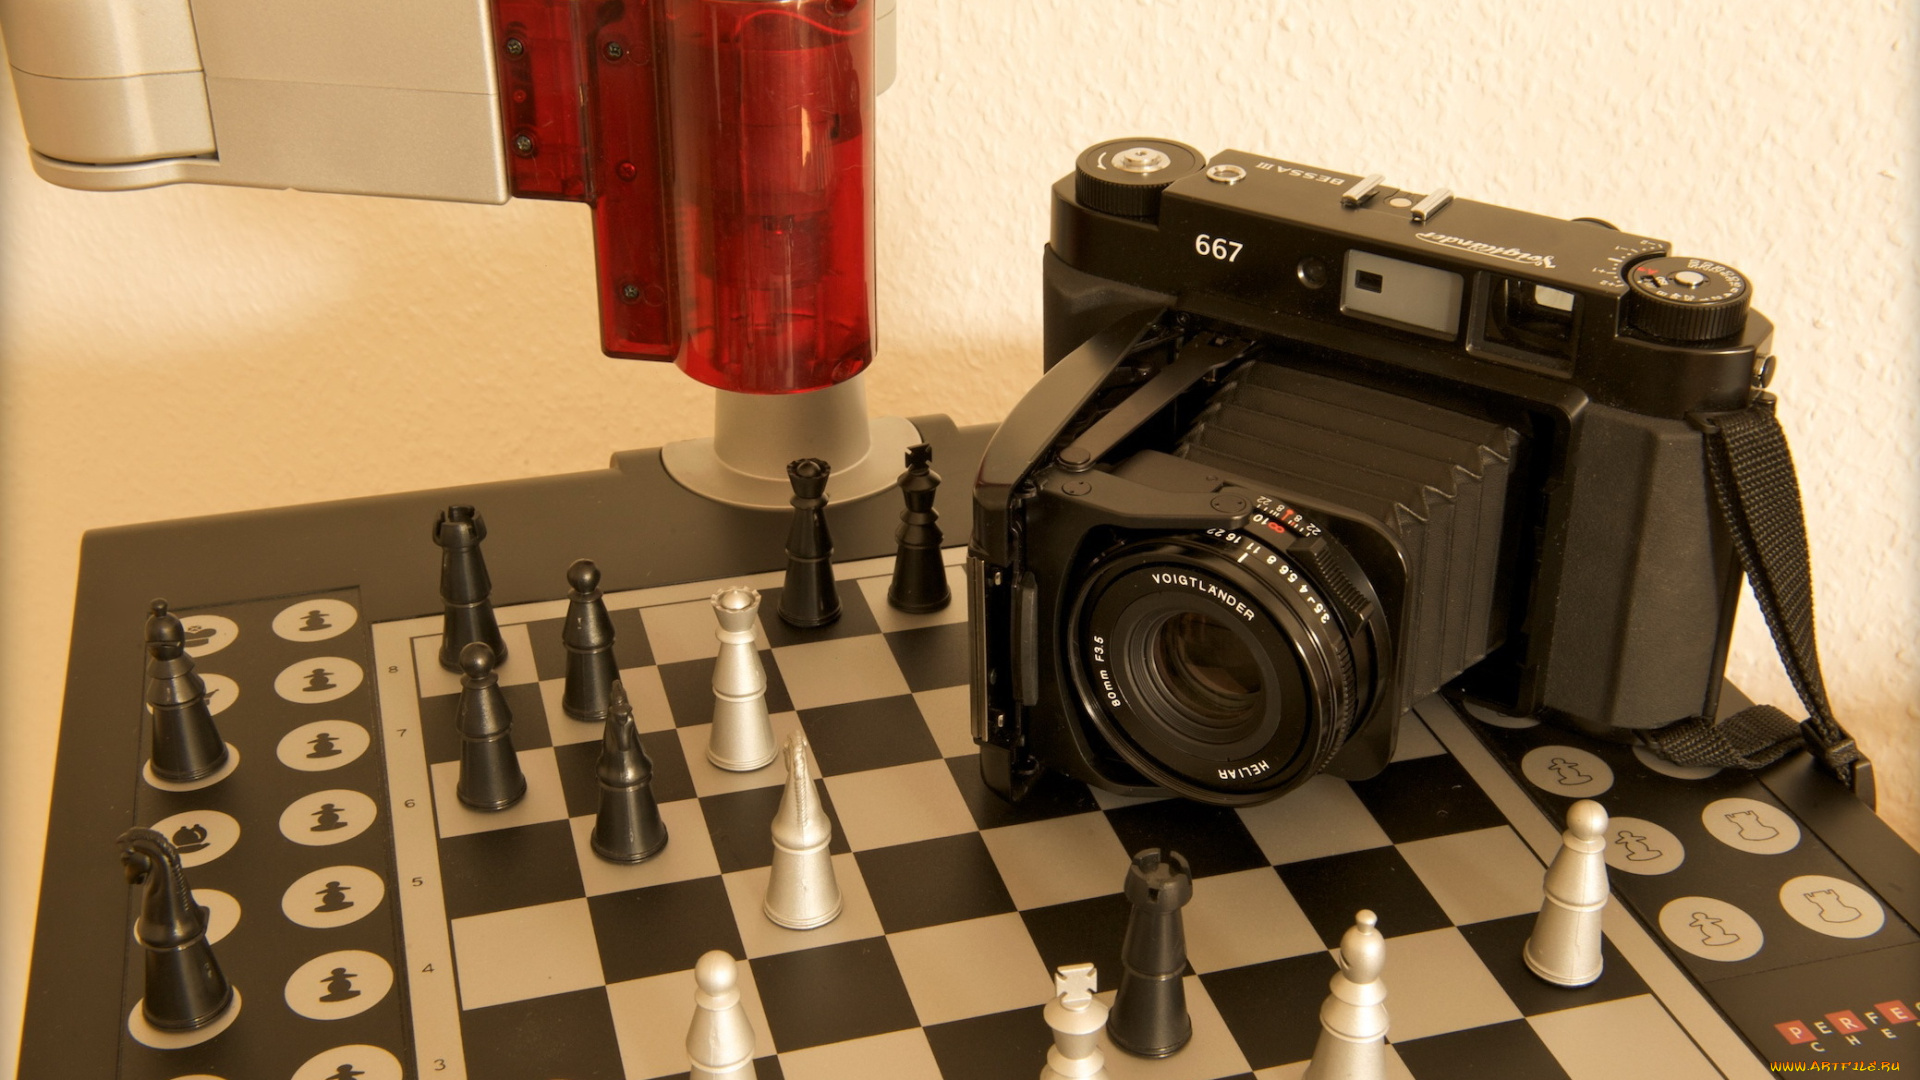 voigtlander, бренды, -, другое, черный, камера, фотоаппарат, лампа, игра, фигуры, доска, шахматы